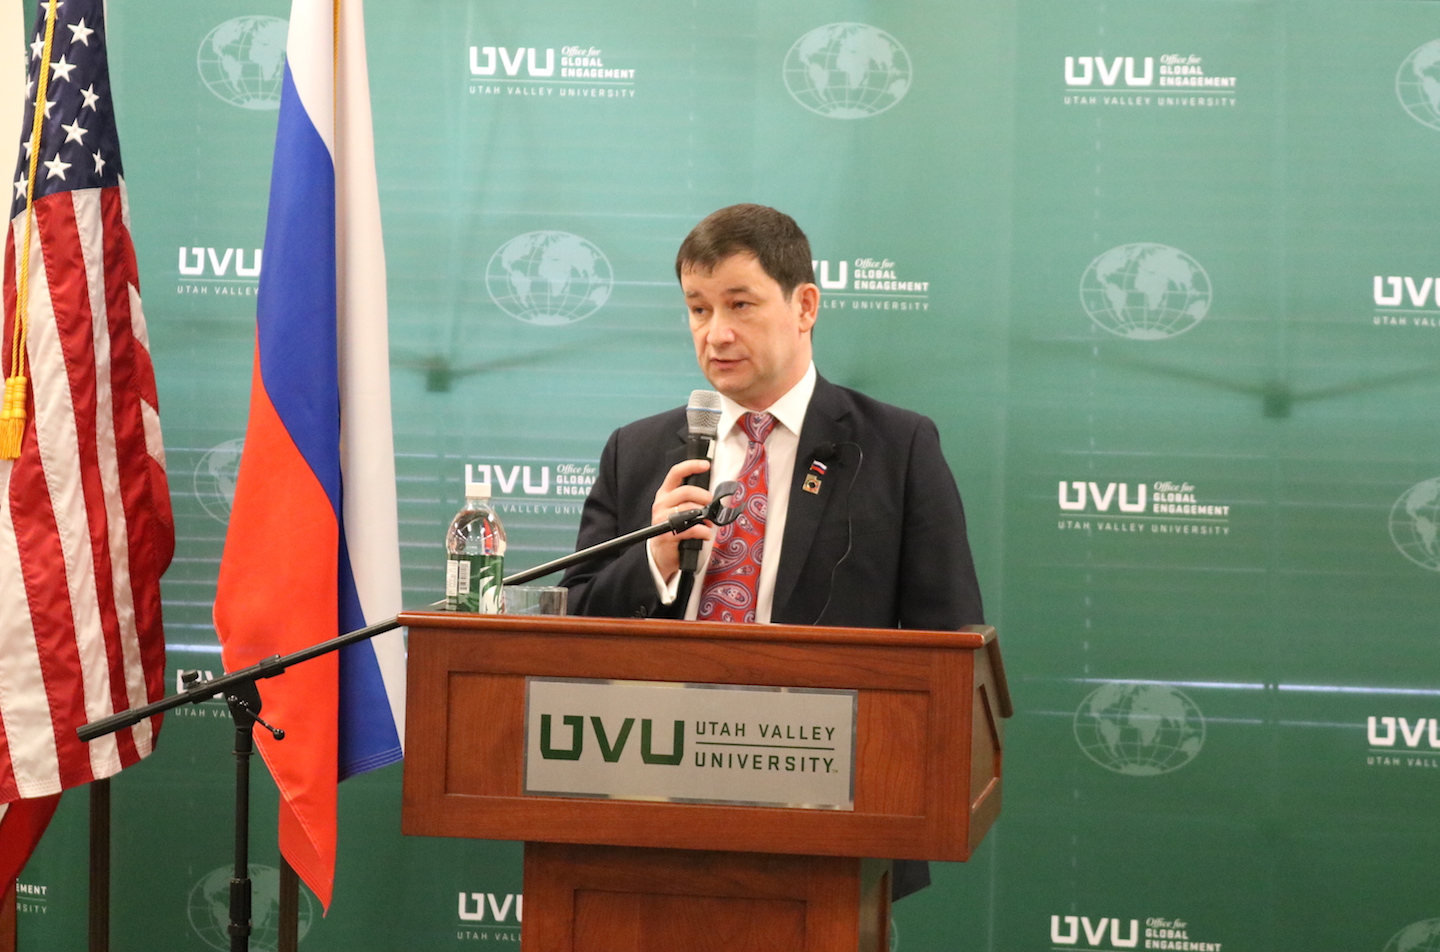 Ambassador Polyanskiy giving a presentation to UVU students.